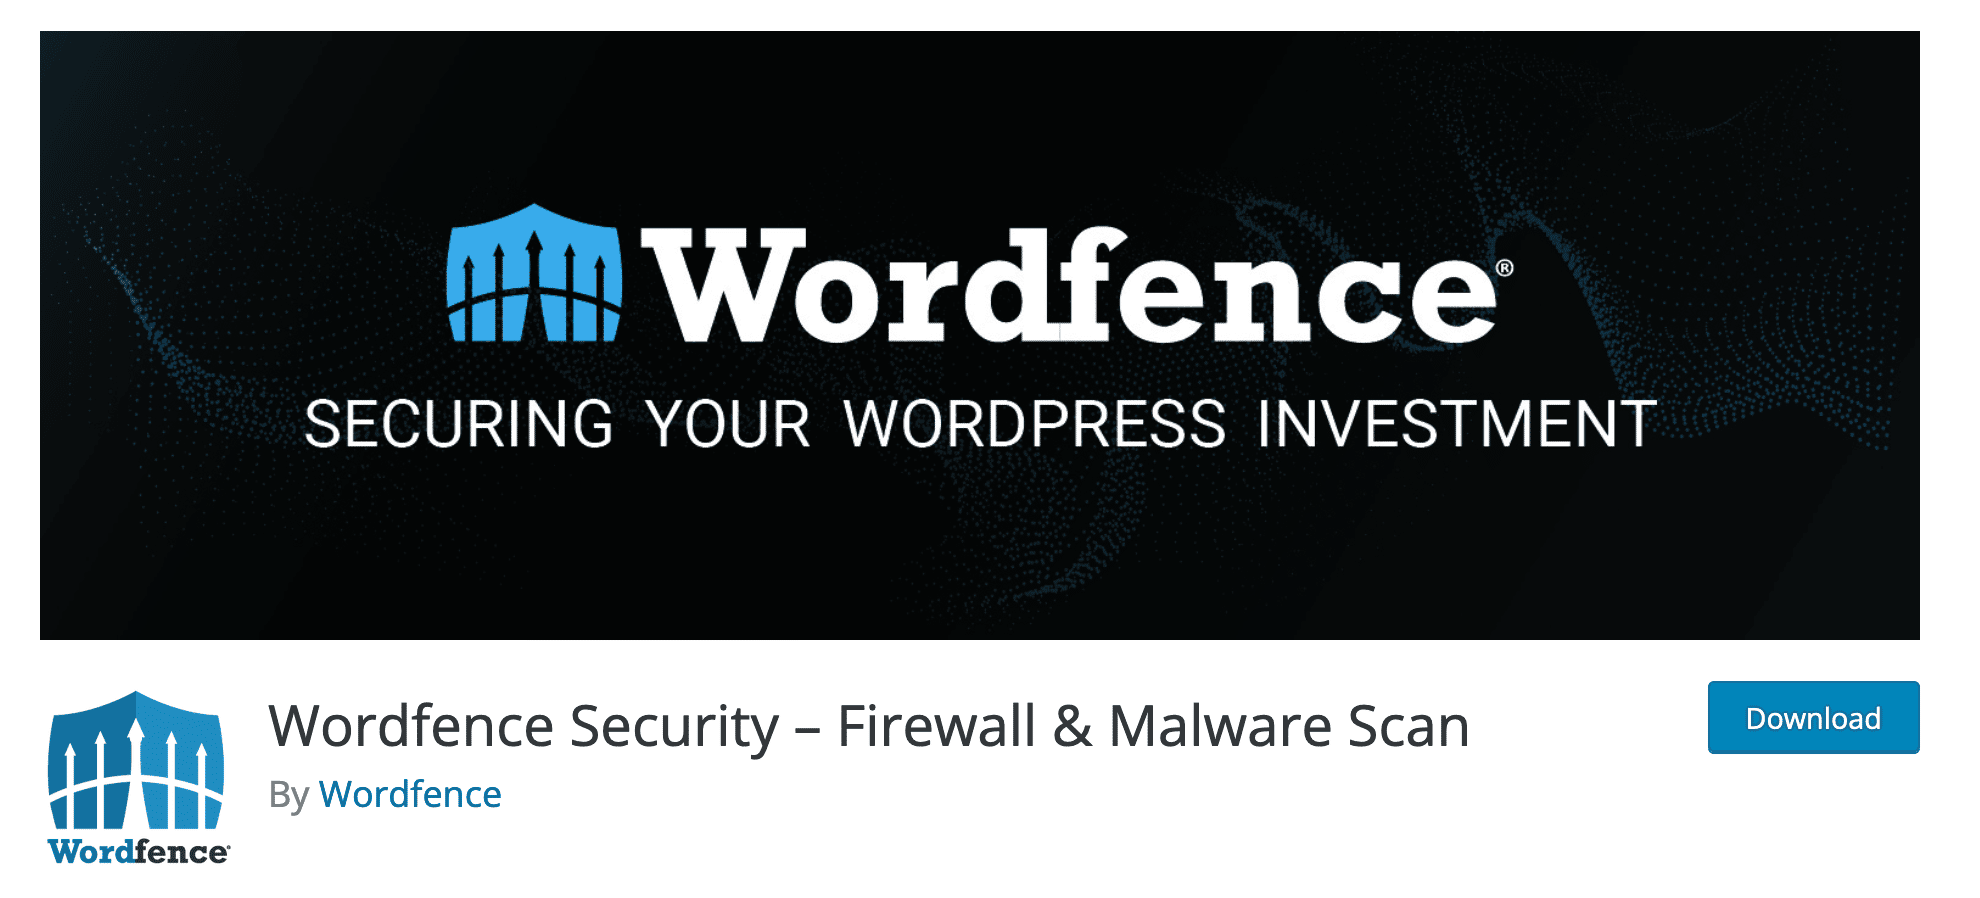 Wordfence Security is a WordPress security plugin.